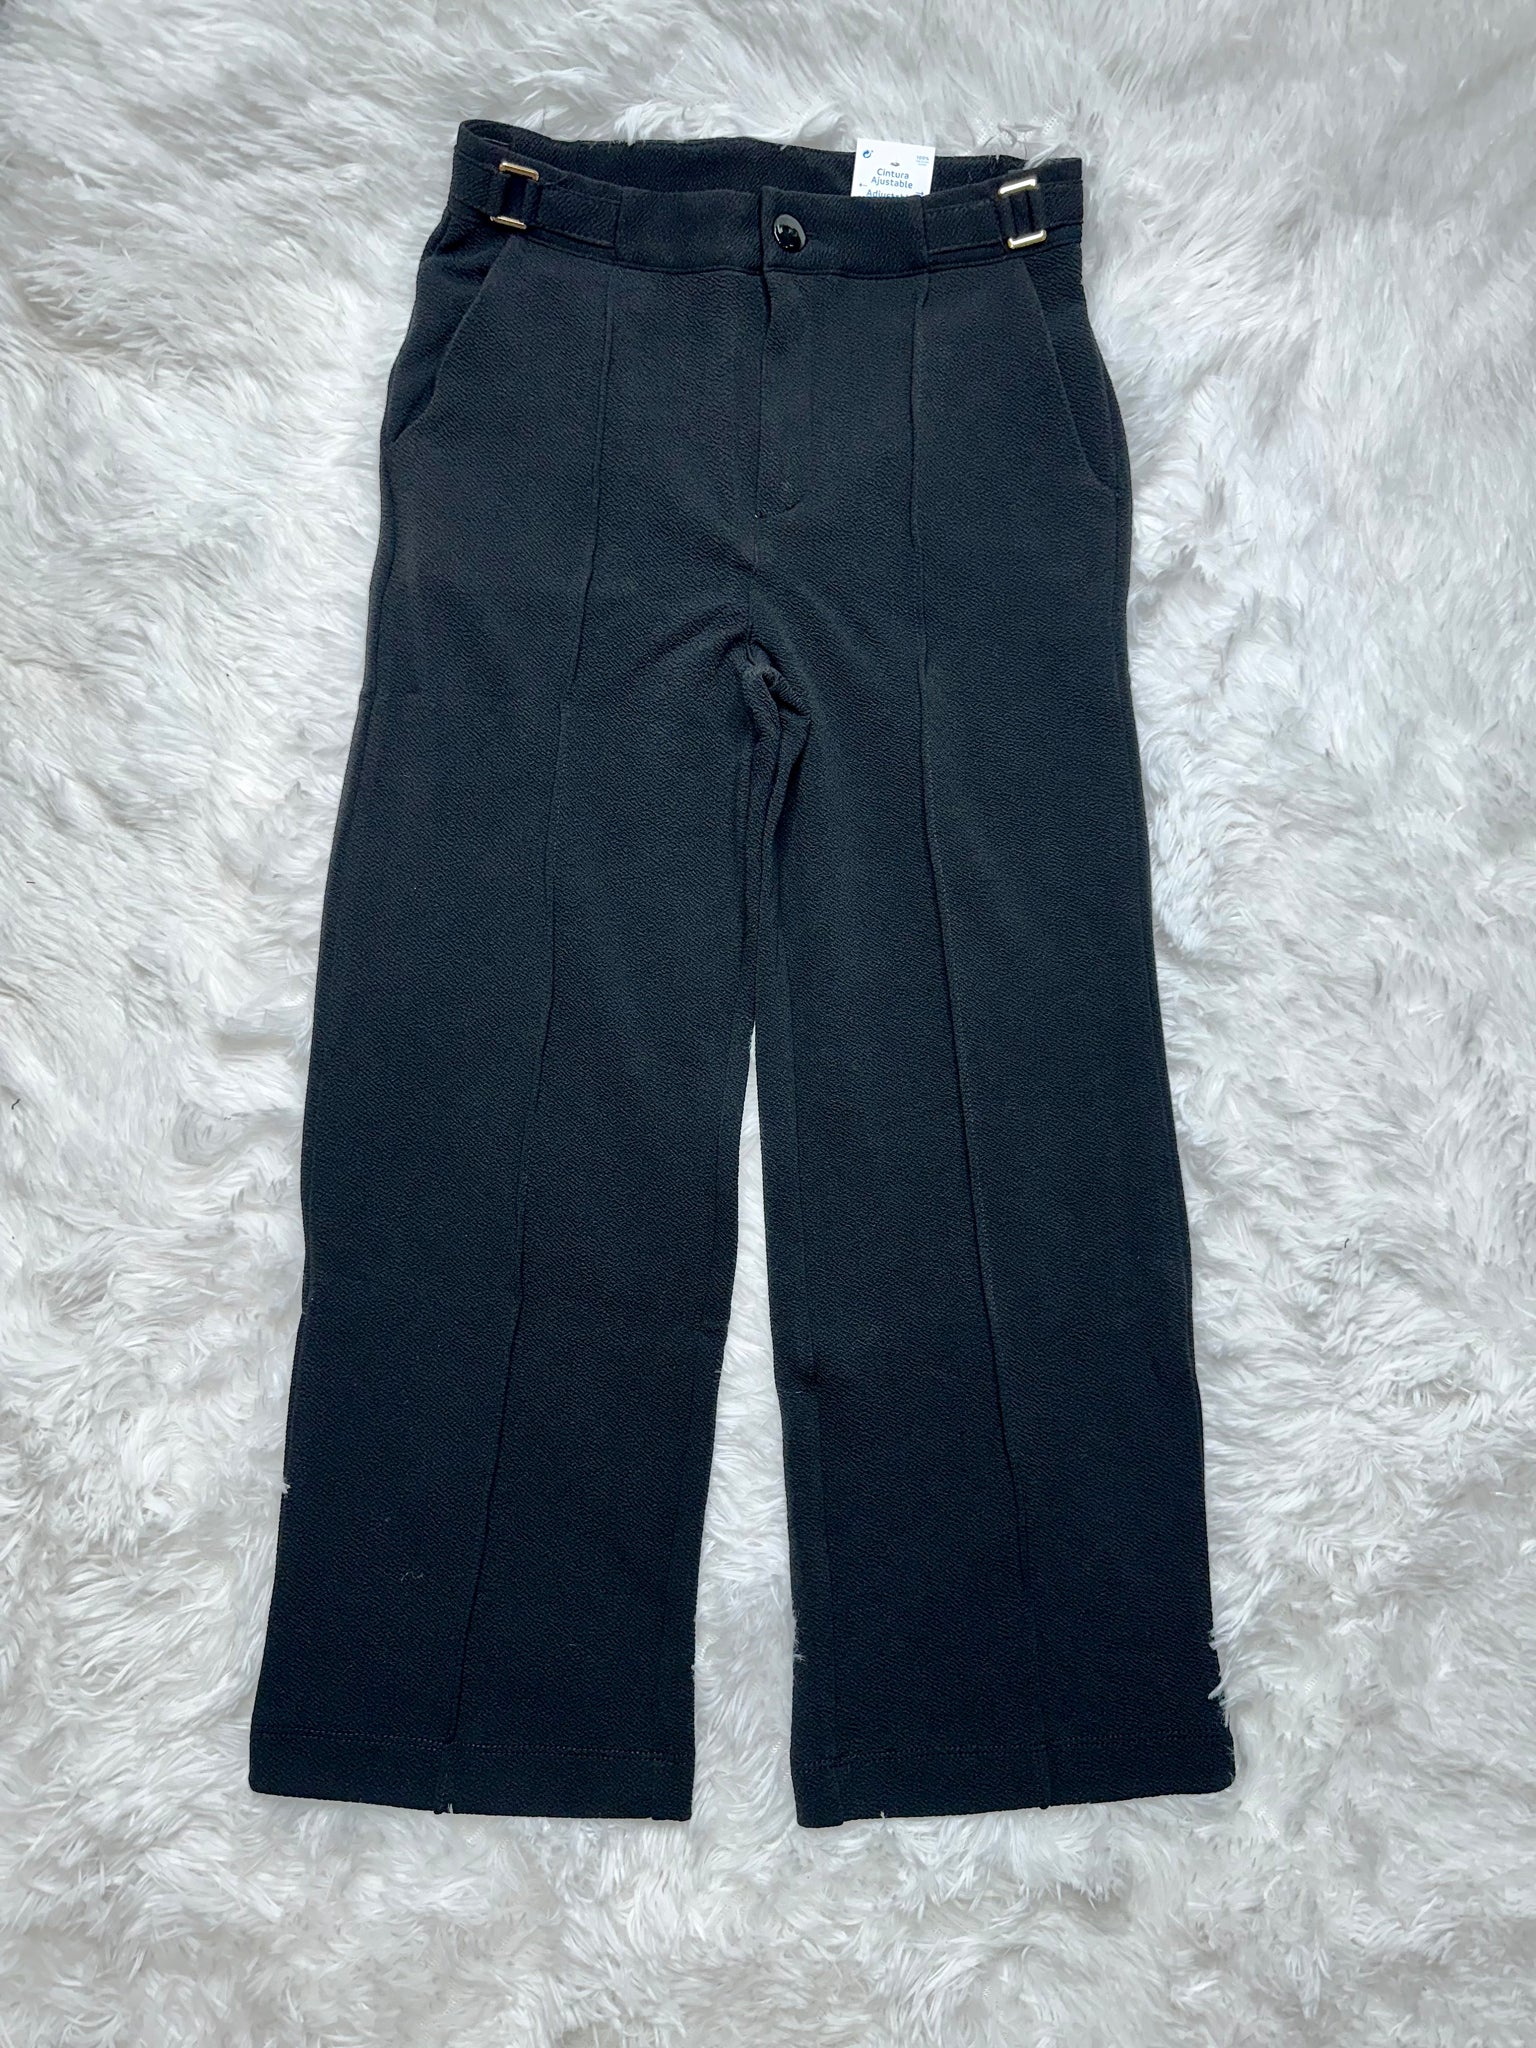 7505 Black Crepe Knit Pants